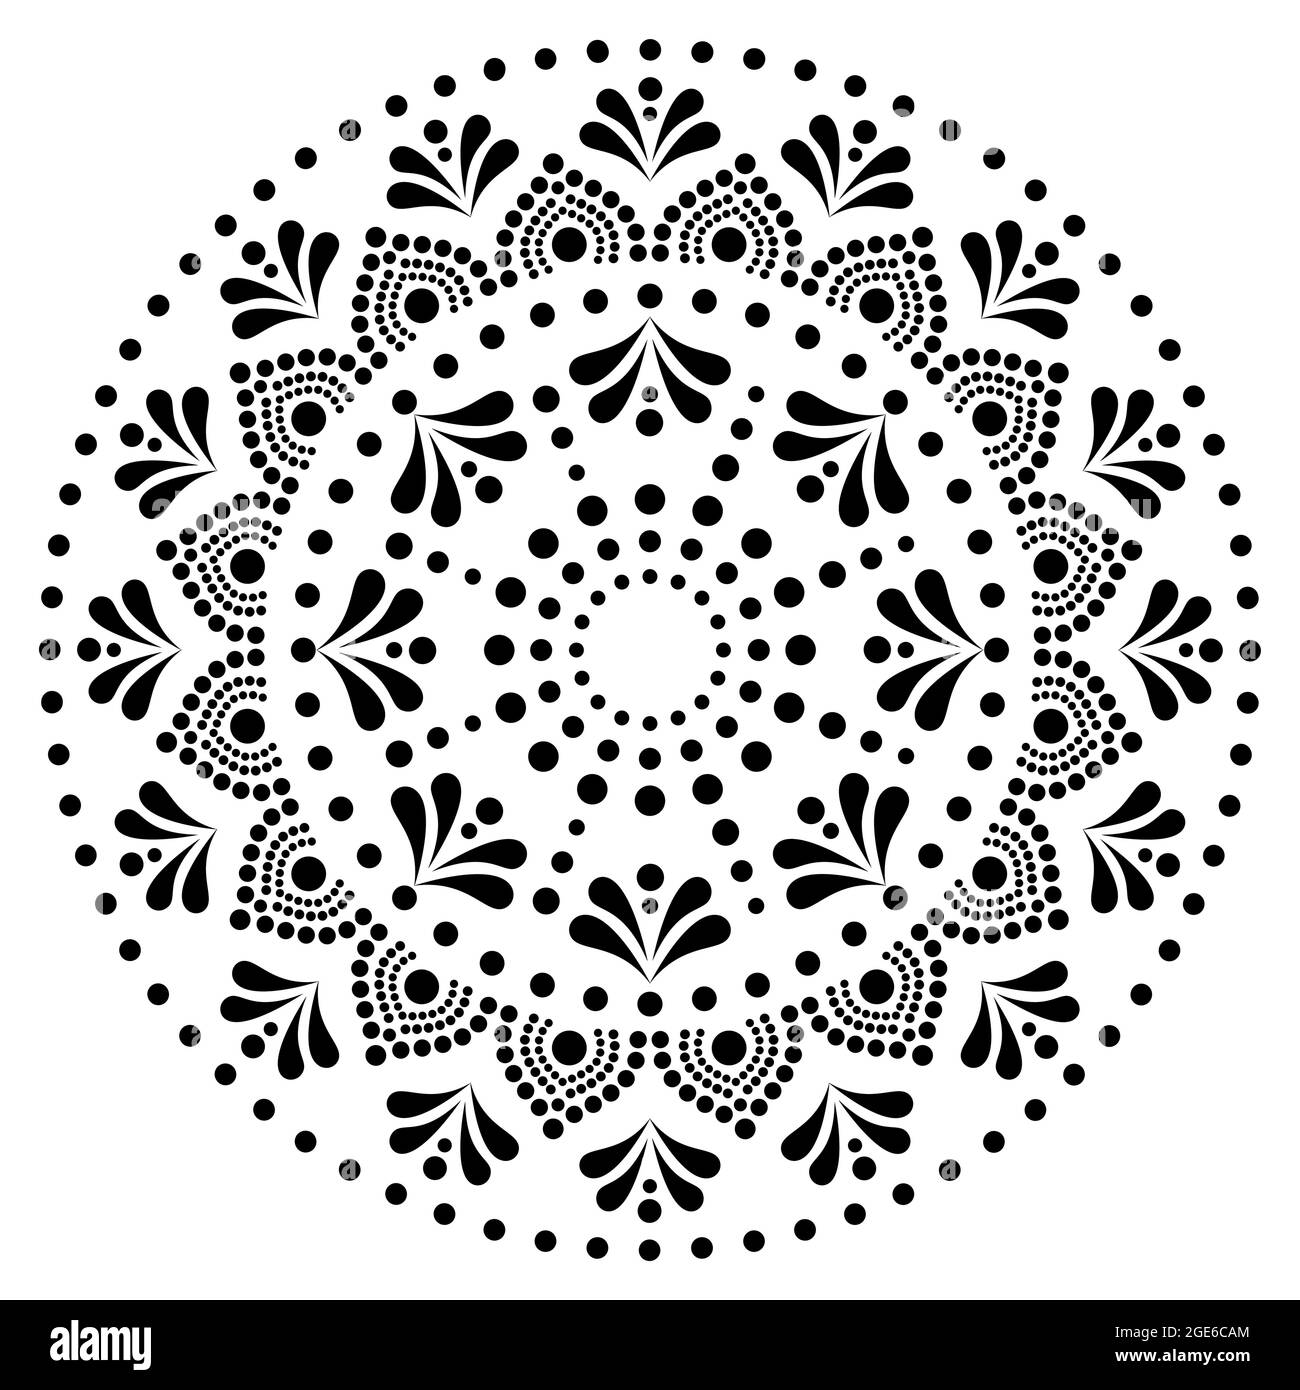 Vector dot painting mandalas. Aboriginal style of dot painting